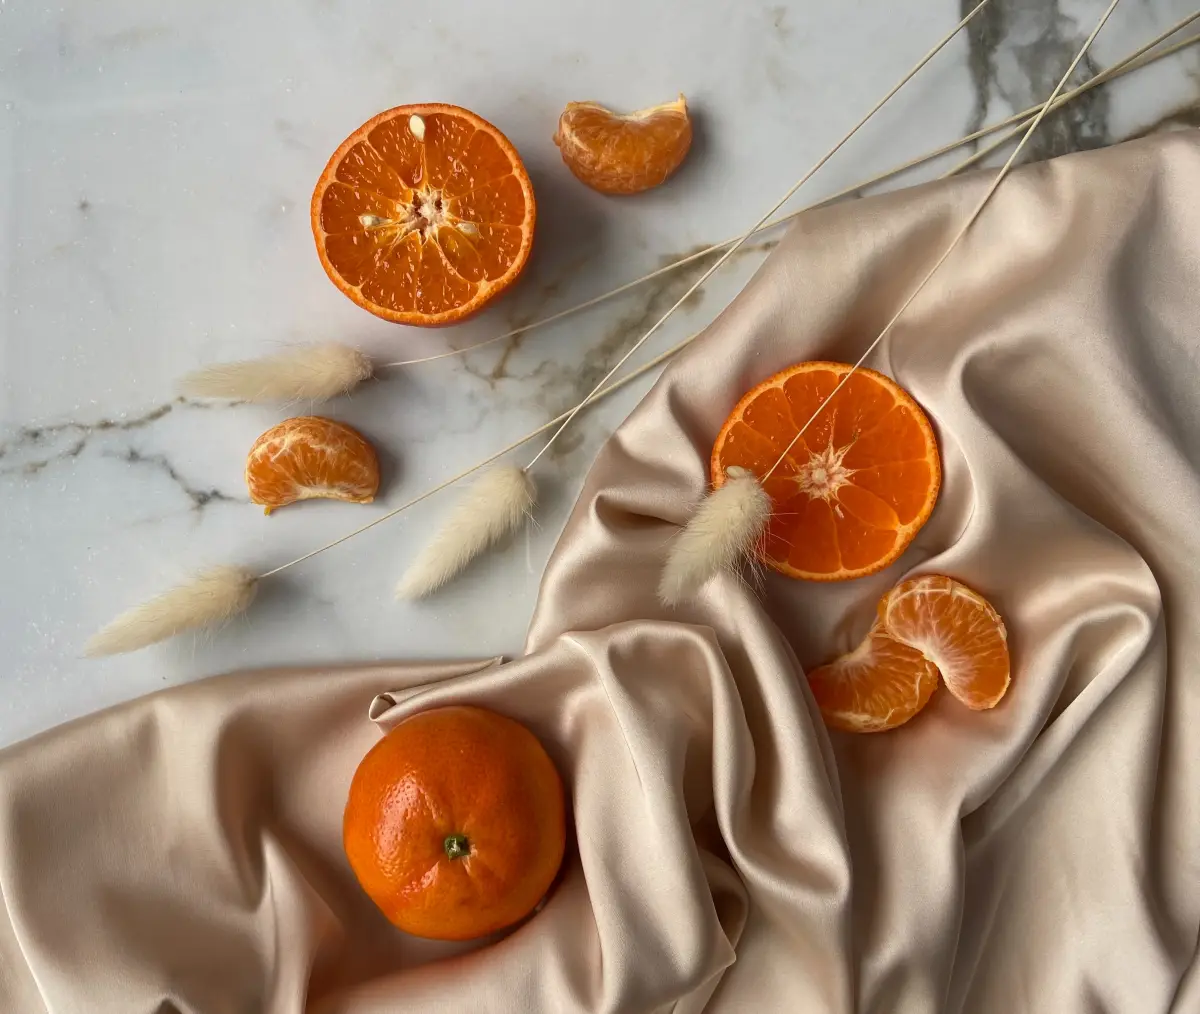 tissu soie herbe sechee tranches clementine agrume surface marbre